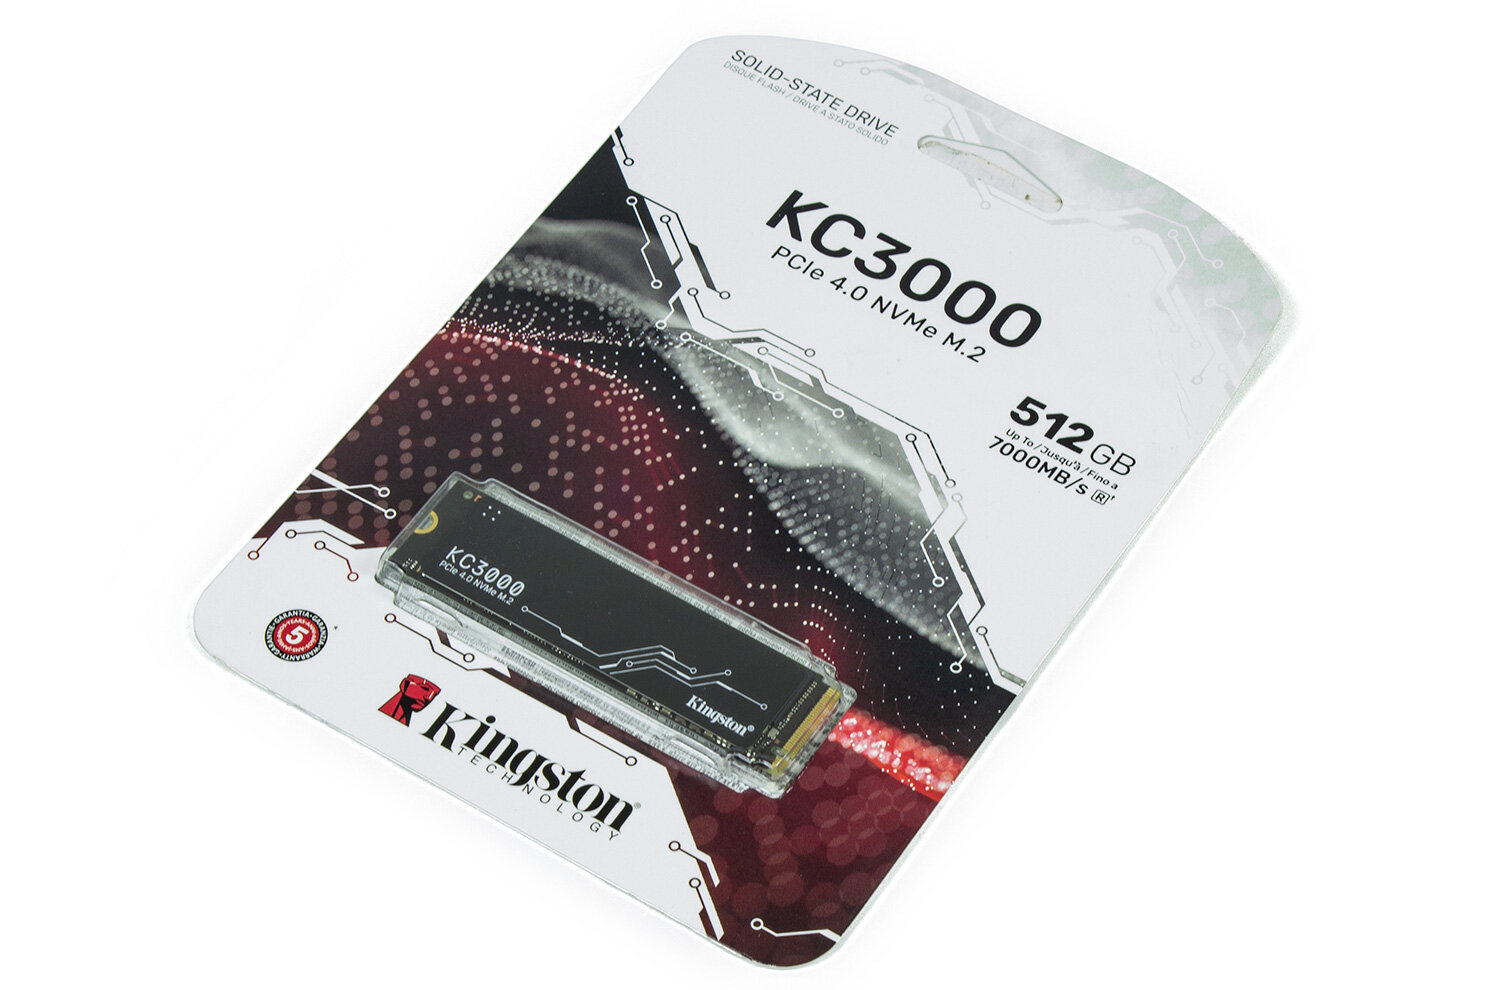 Kingston kc3000 купить. Kingston SSD kc3000. M.2 накопитель Kingston kc3000. 512 ГБ SSD M.2 накопитель Kingston kc3000 [skc3000s/512g]. Kingston Kc 3000 512 Гбайт.